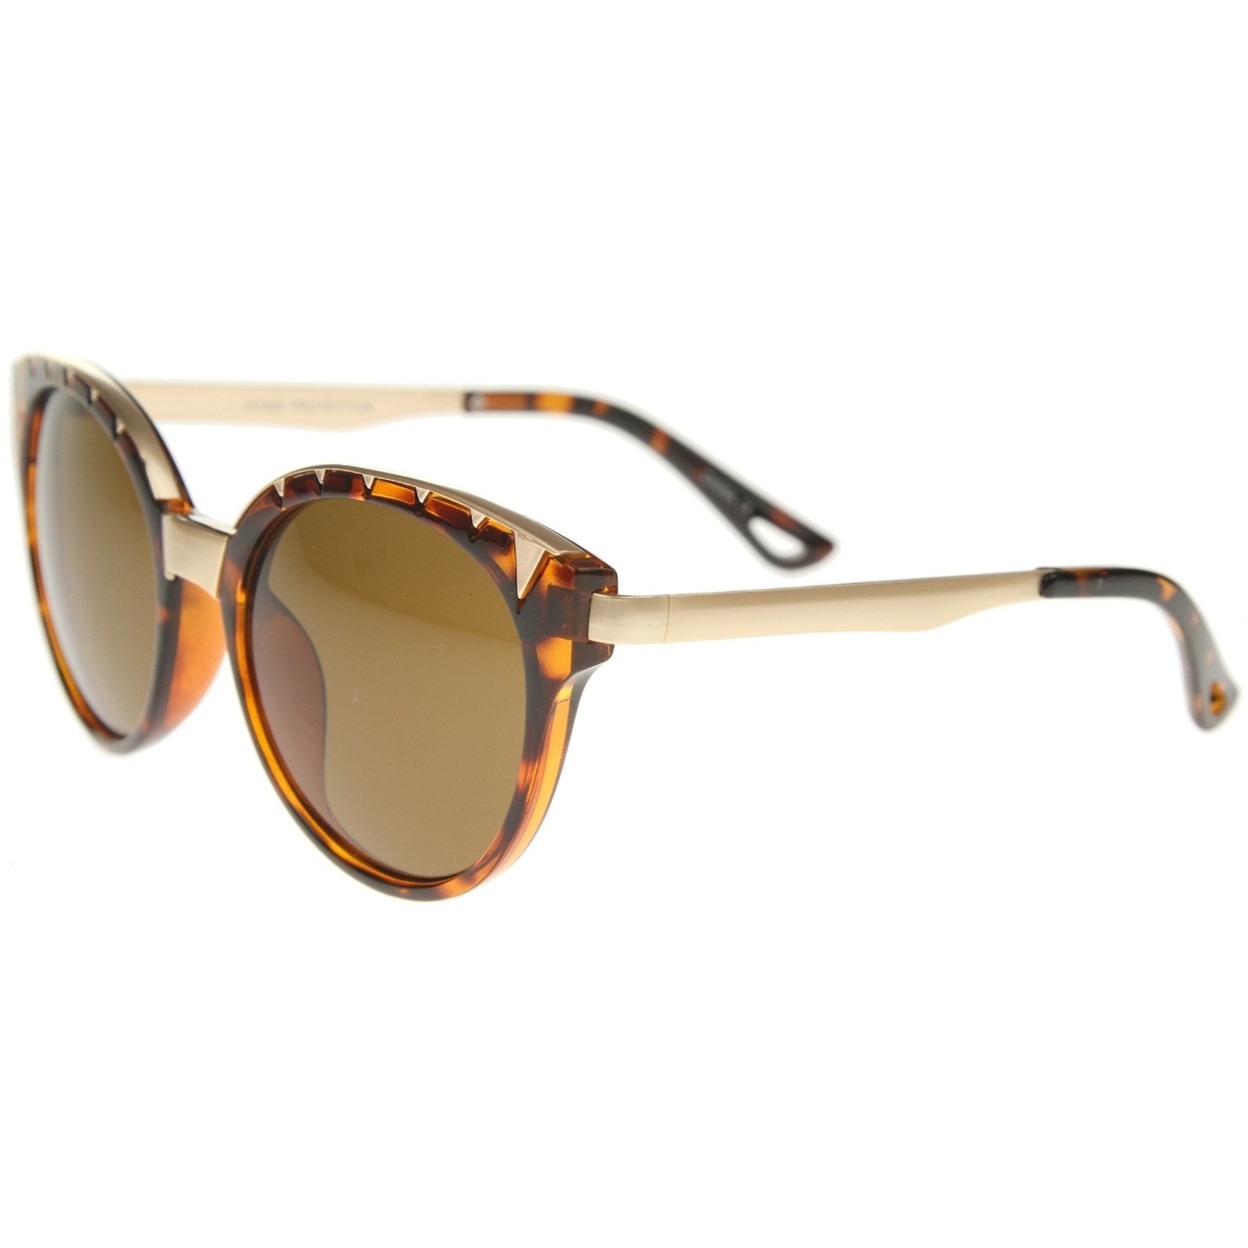 Women's Oversize Triangle Detail Round Cat Eye Sunglasses 55mm - Black-Silver / Lavender